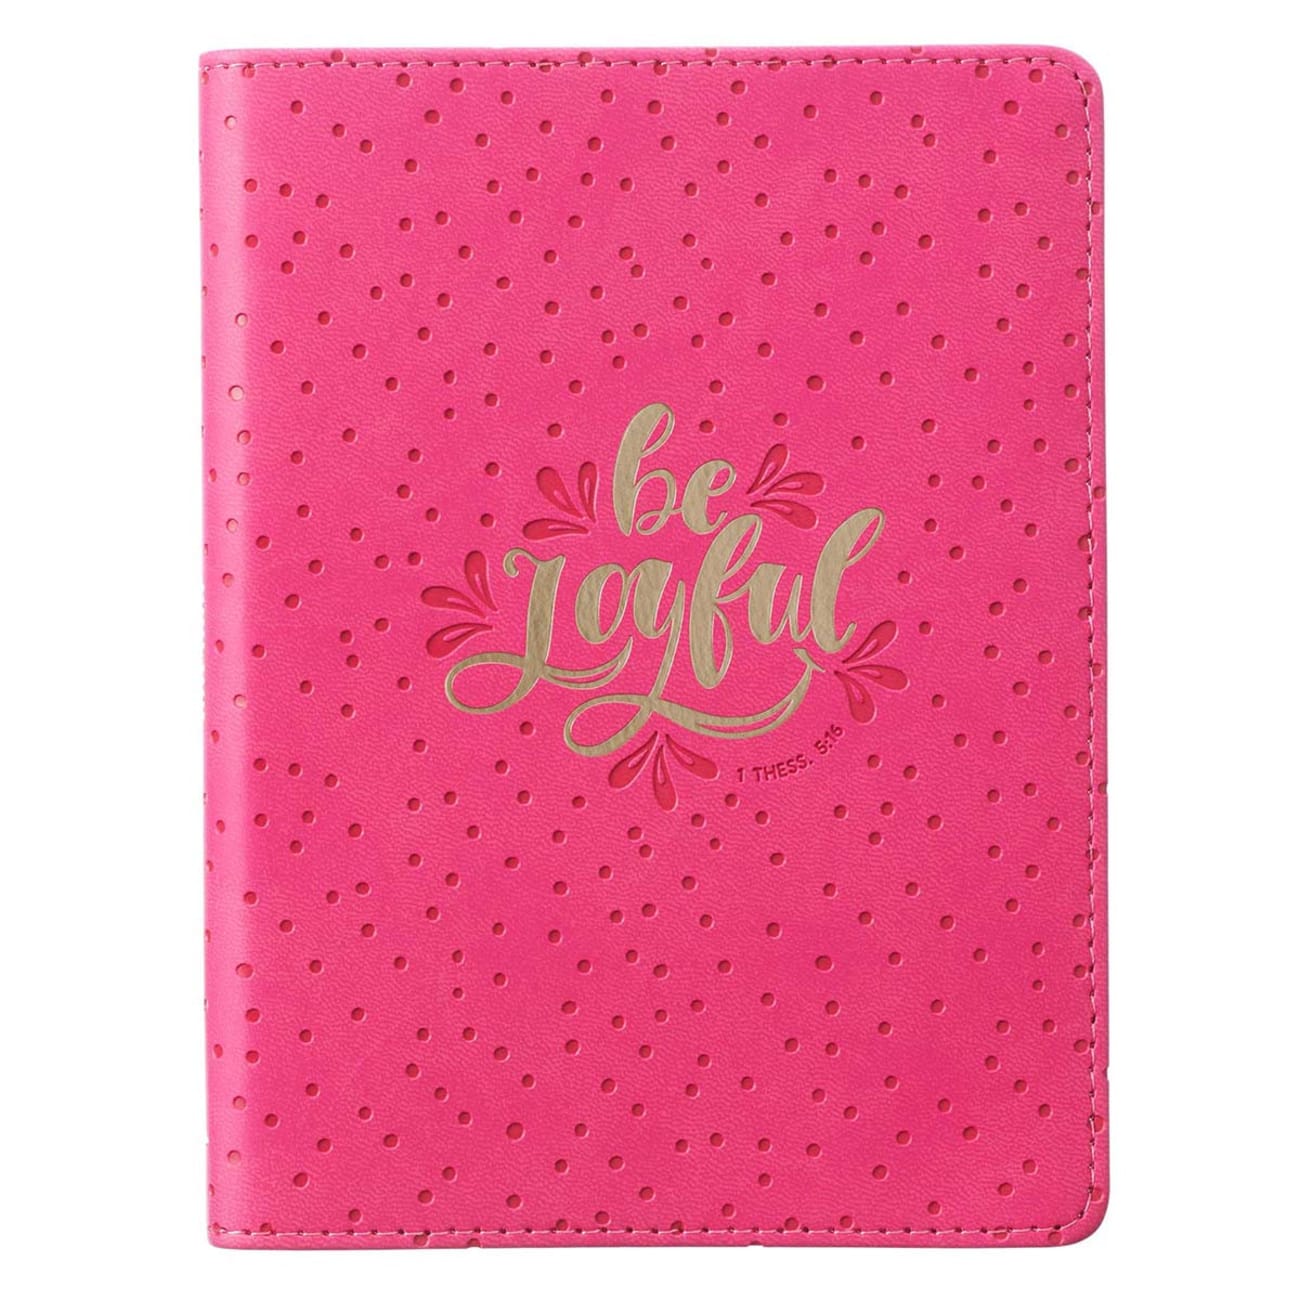 Journal: Be Joyful, Dotted Pink, Handy-Sized Imitation Leather